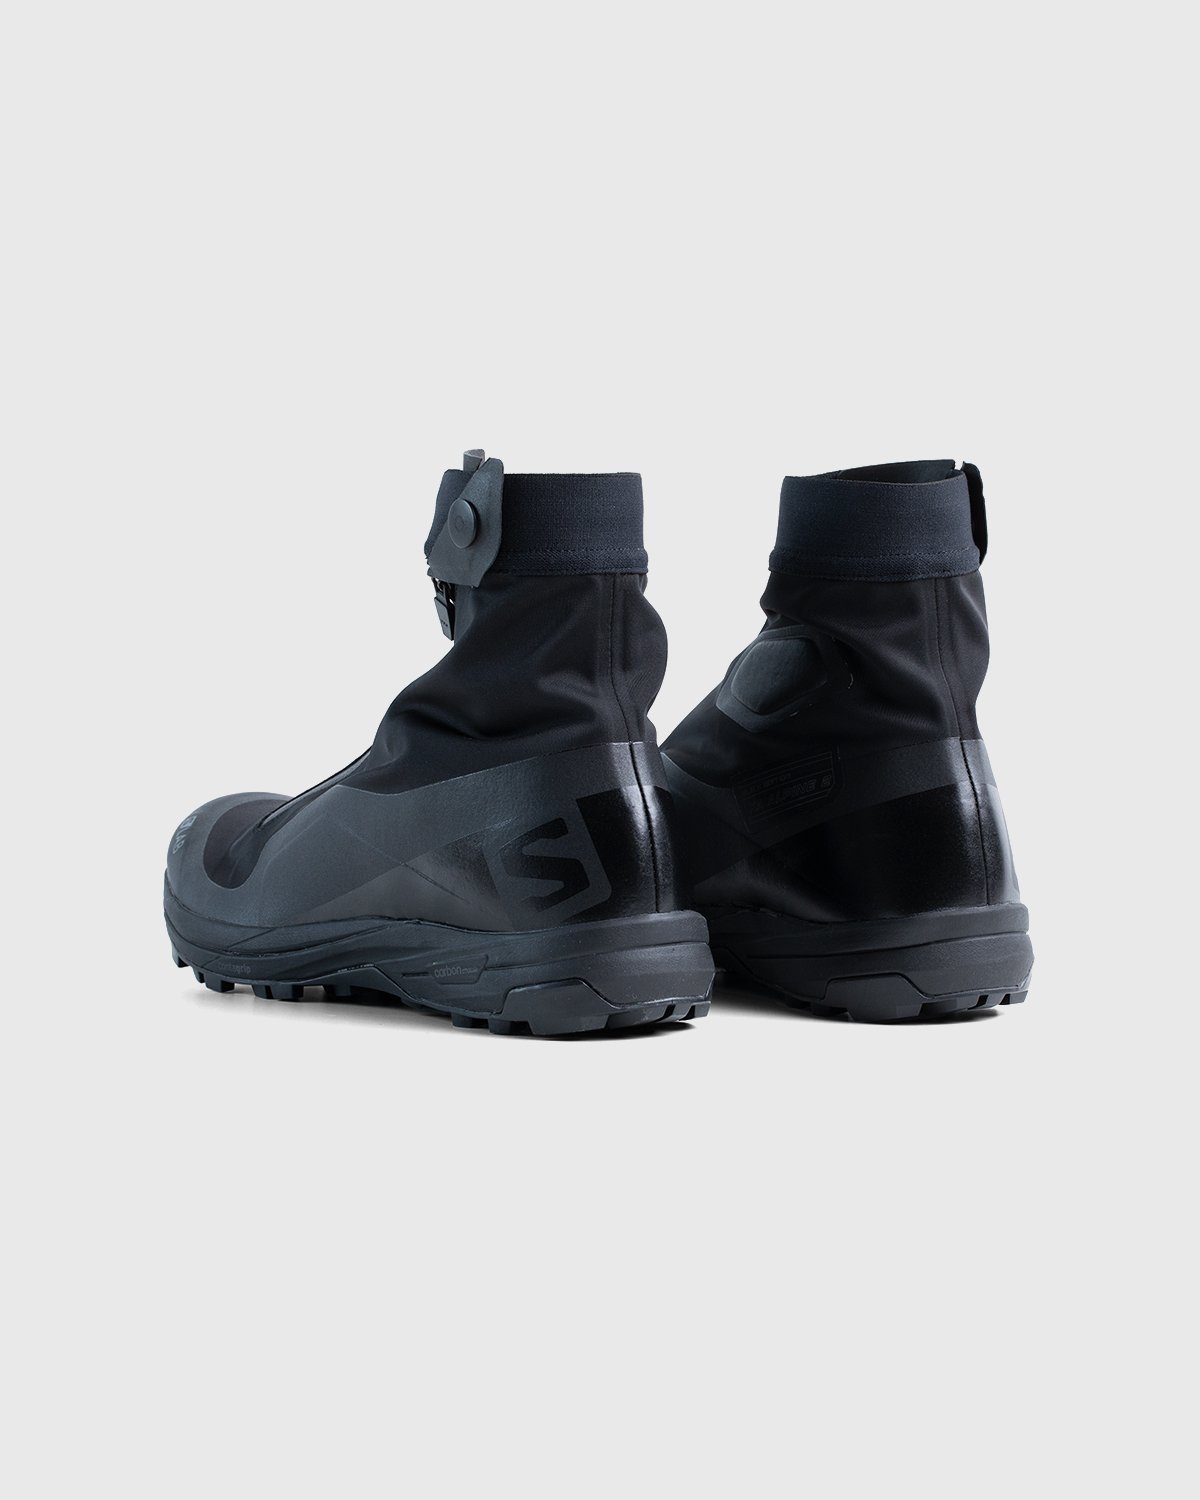 Salomon - S/Lab XA-Alpine 2 Limited Edition Black - Footwear - Black - Image 3